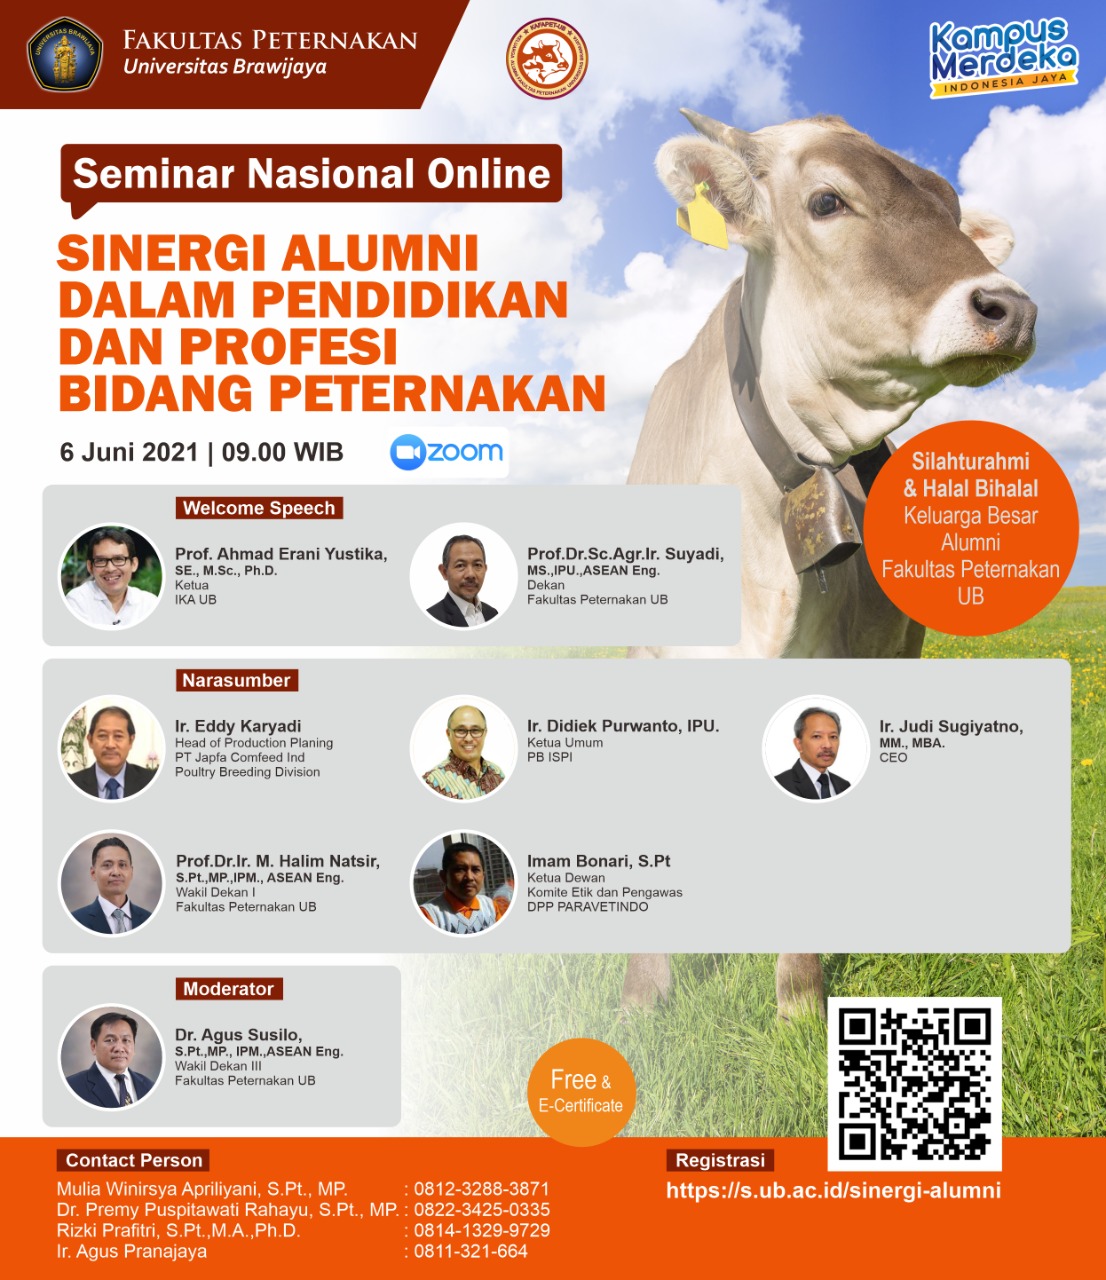 Online National Seminar